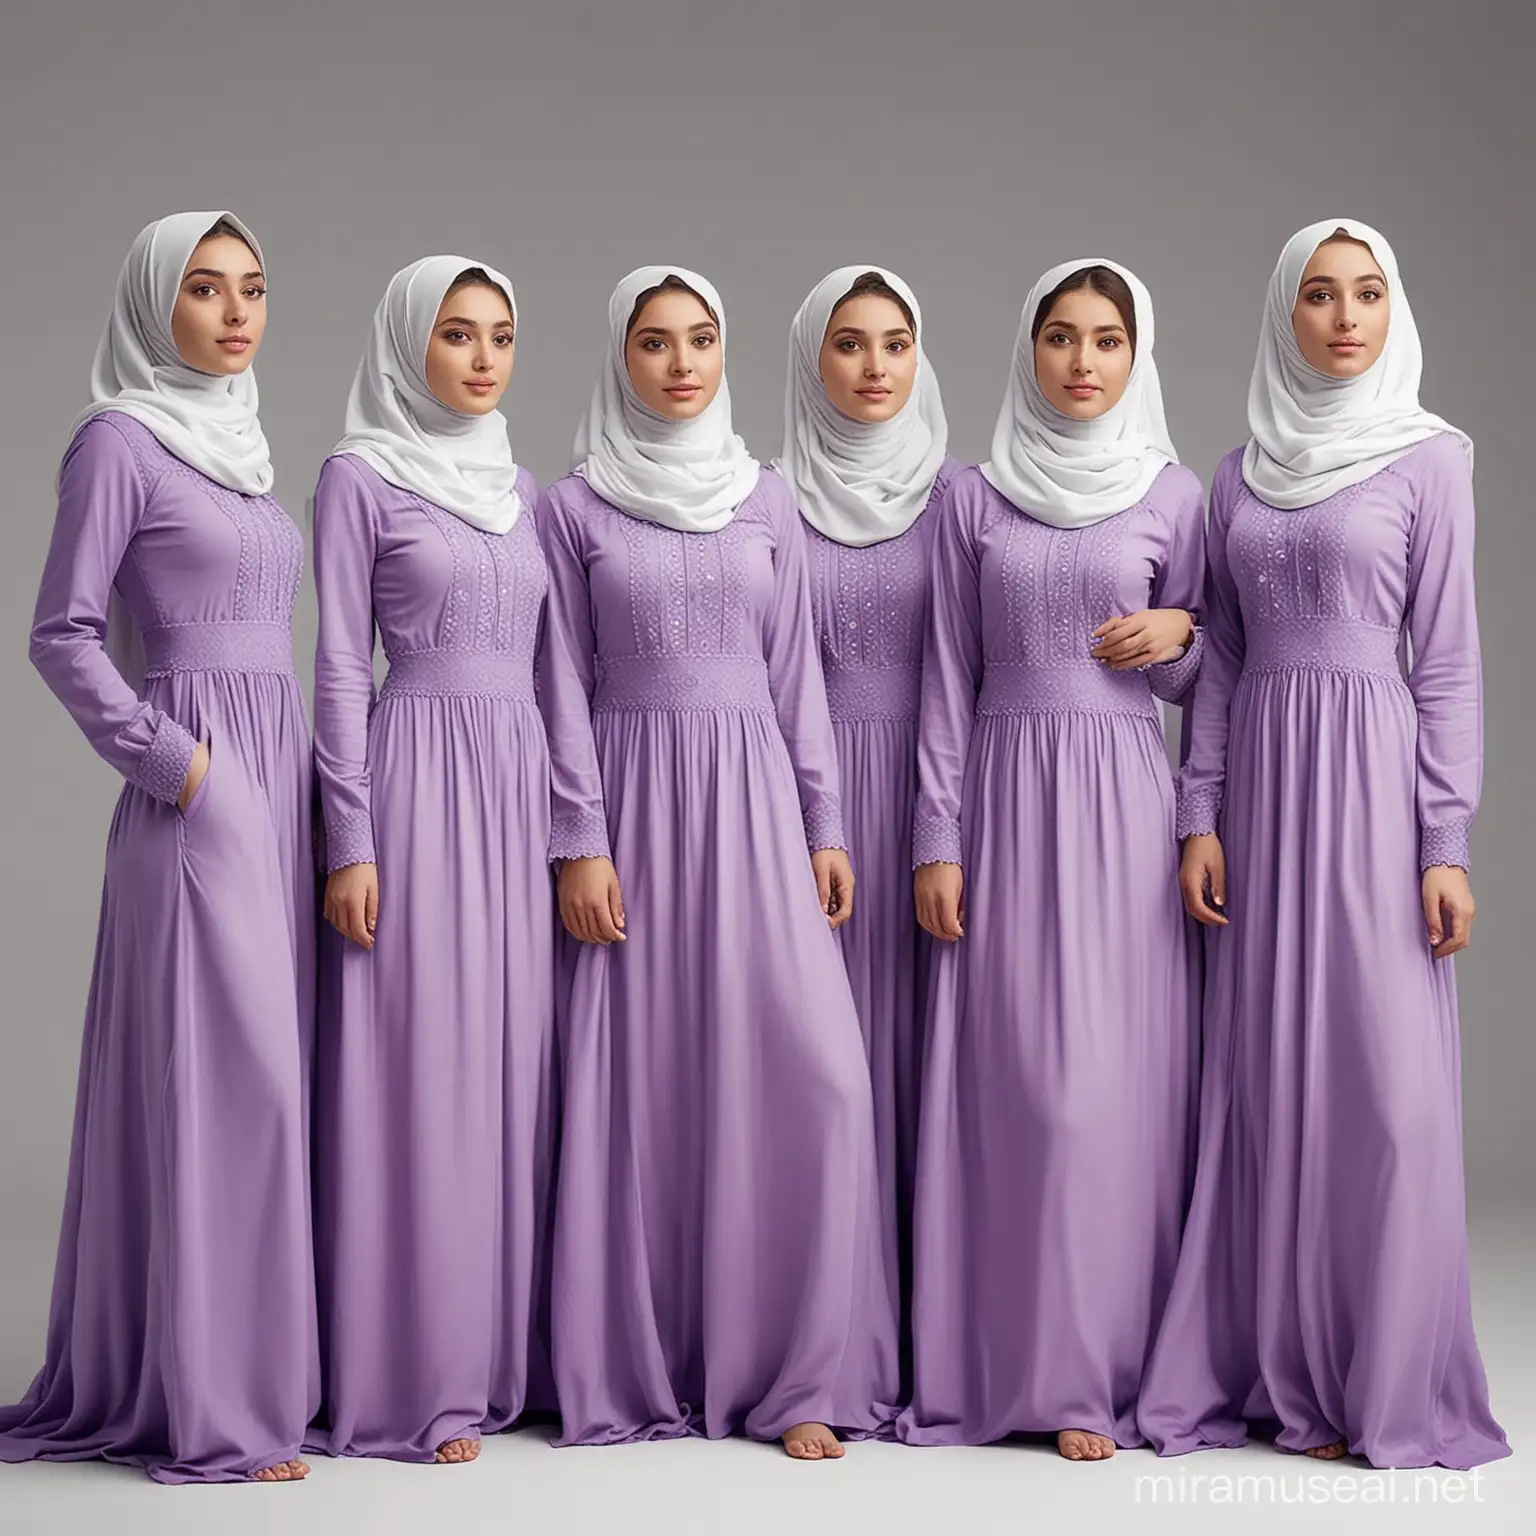 Seven Hijabi Girls in Elegant Purple Dresses Against White Studio Background